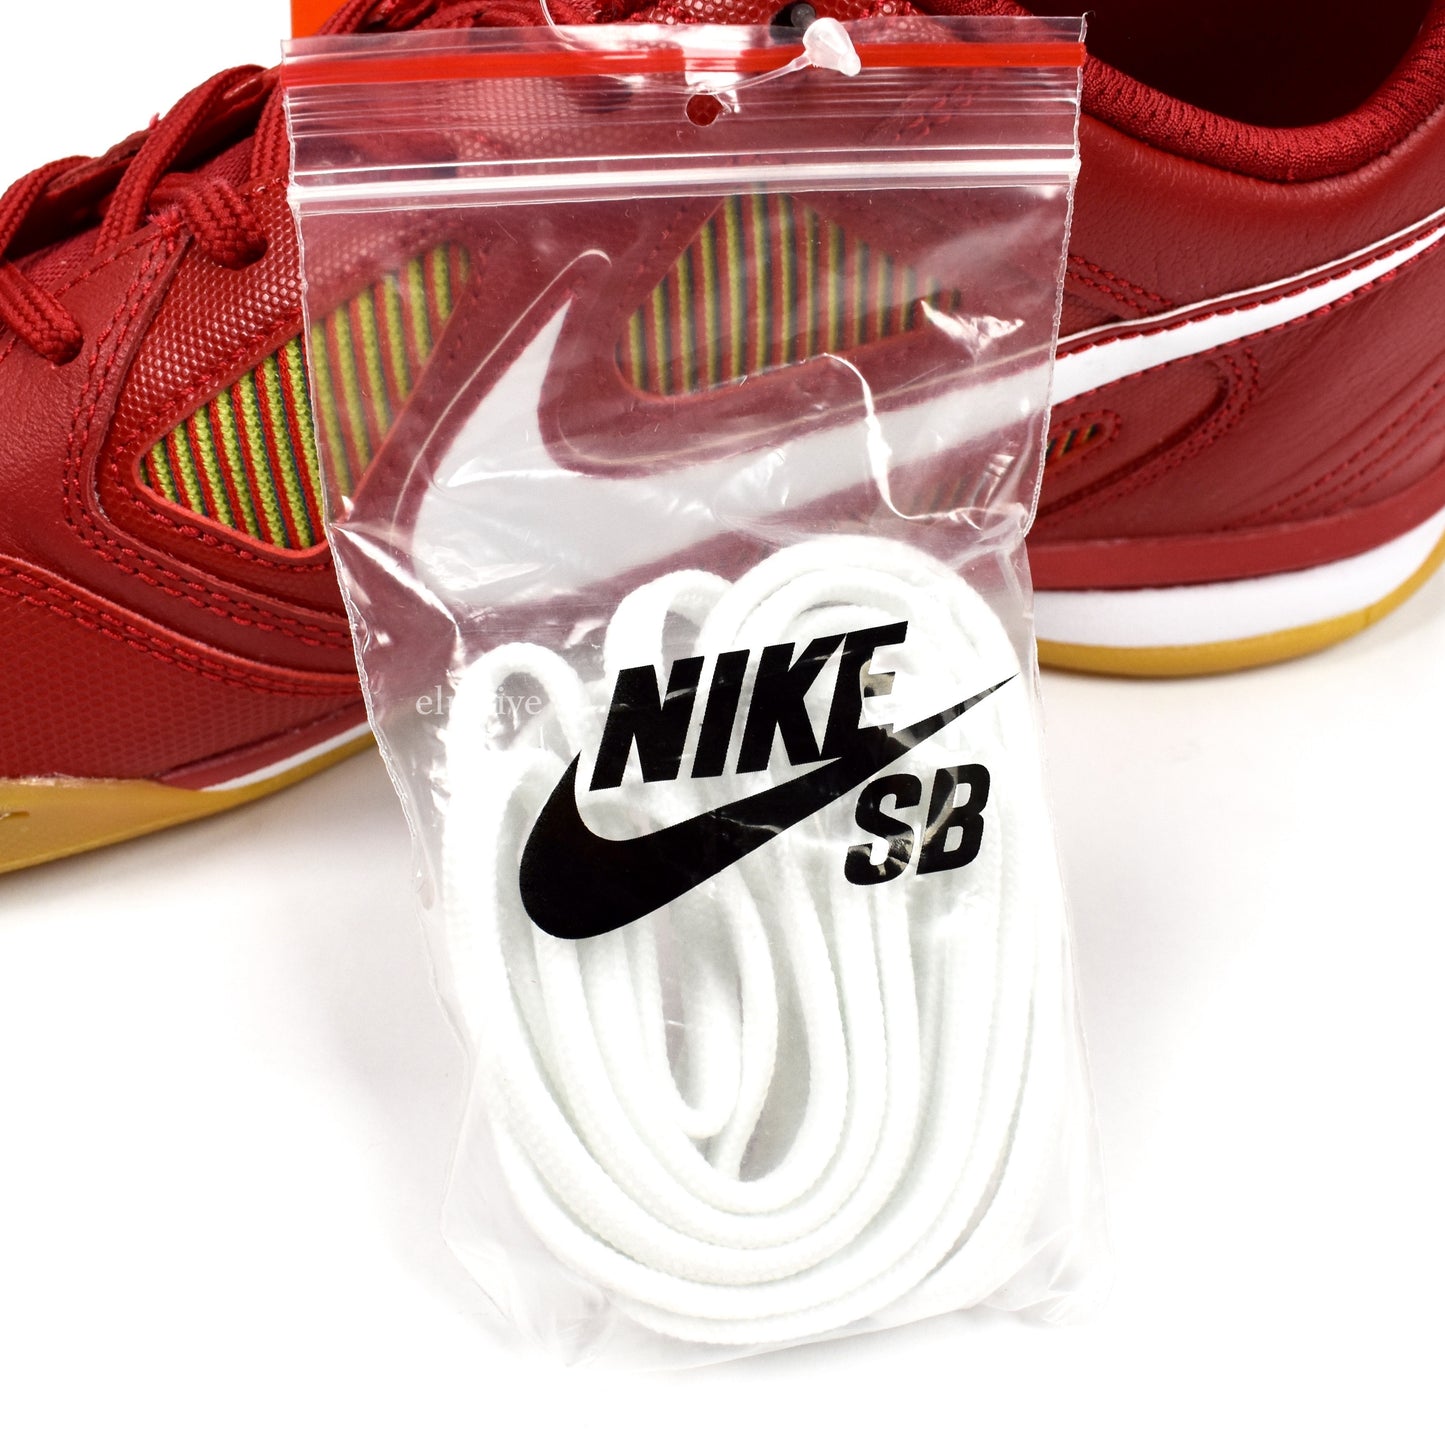 Supreme x Nike - SB Gato QS (Red)